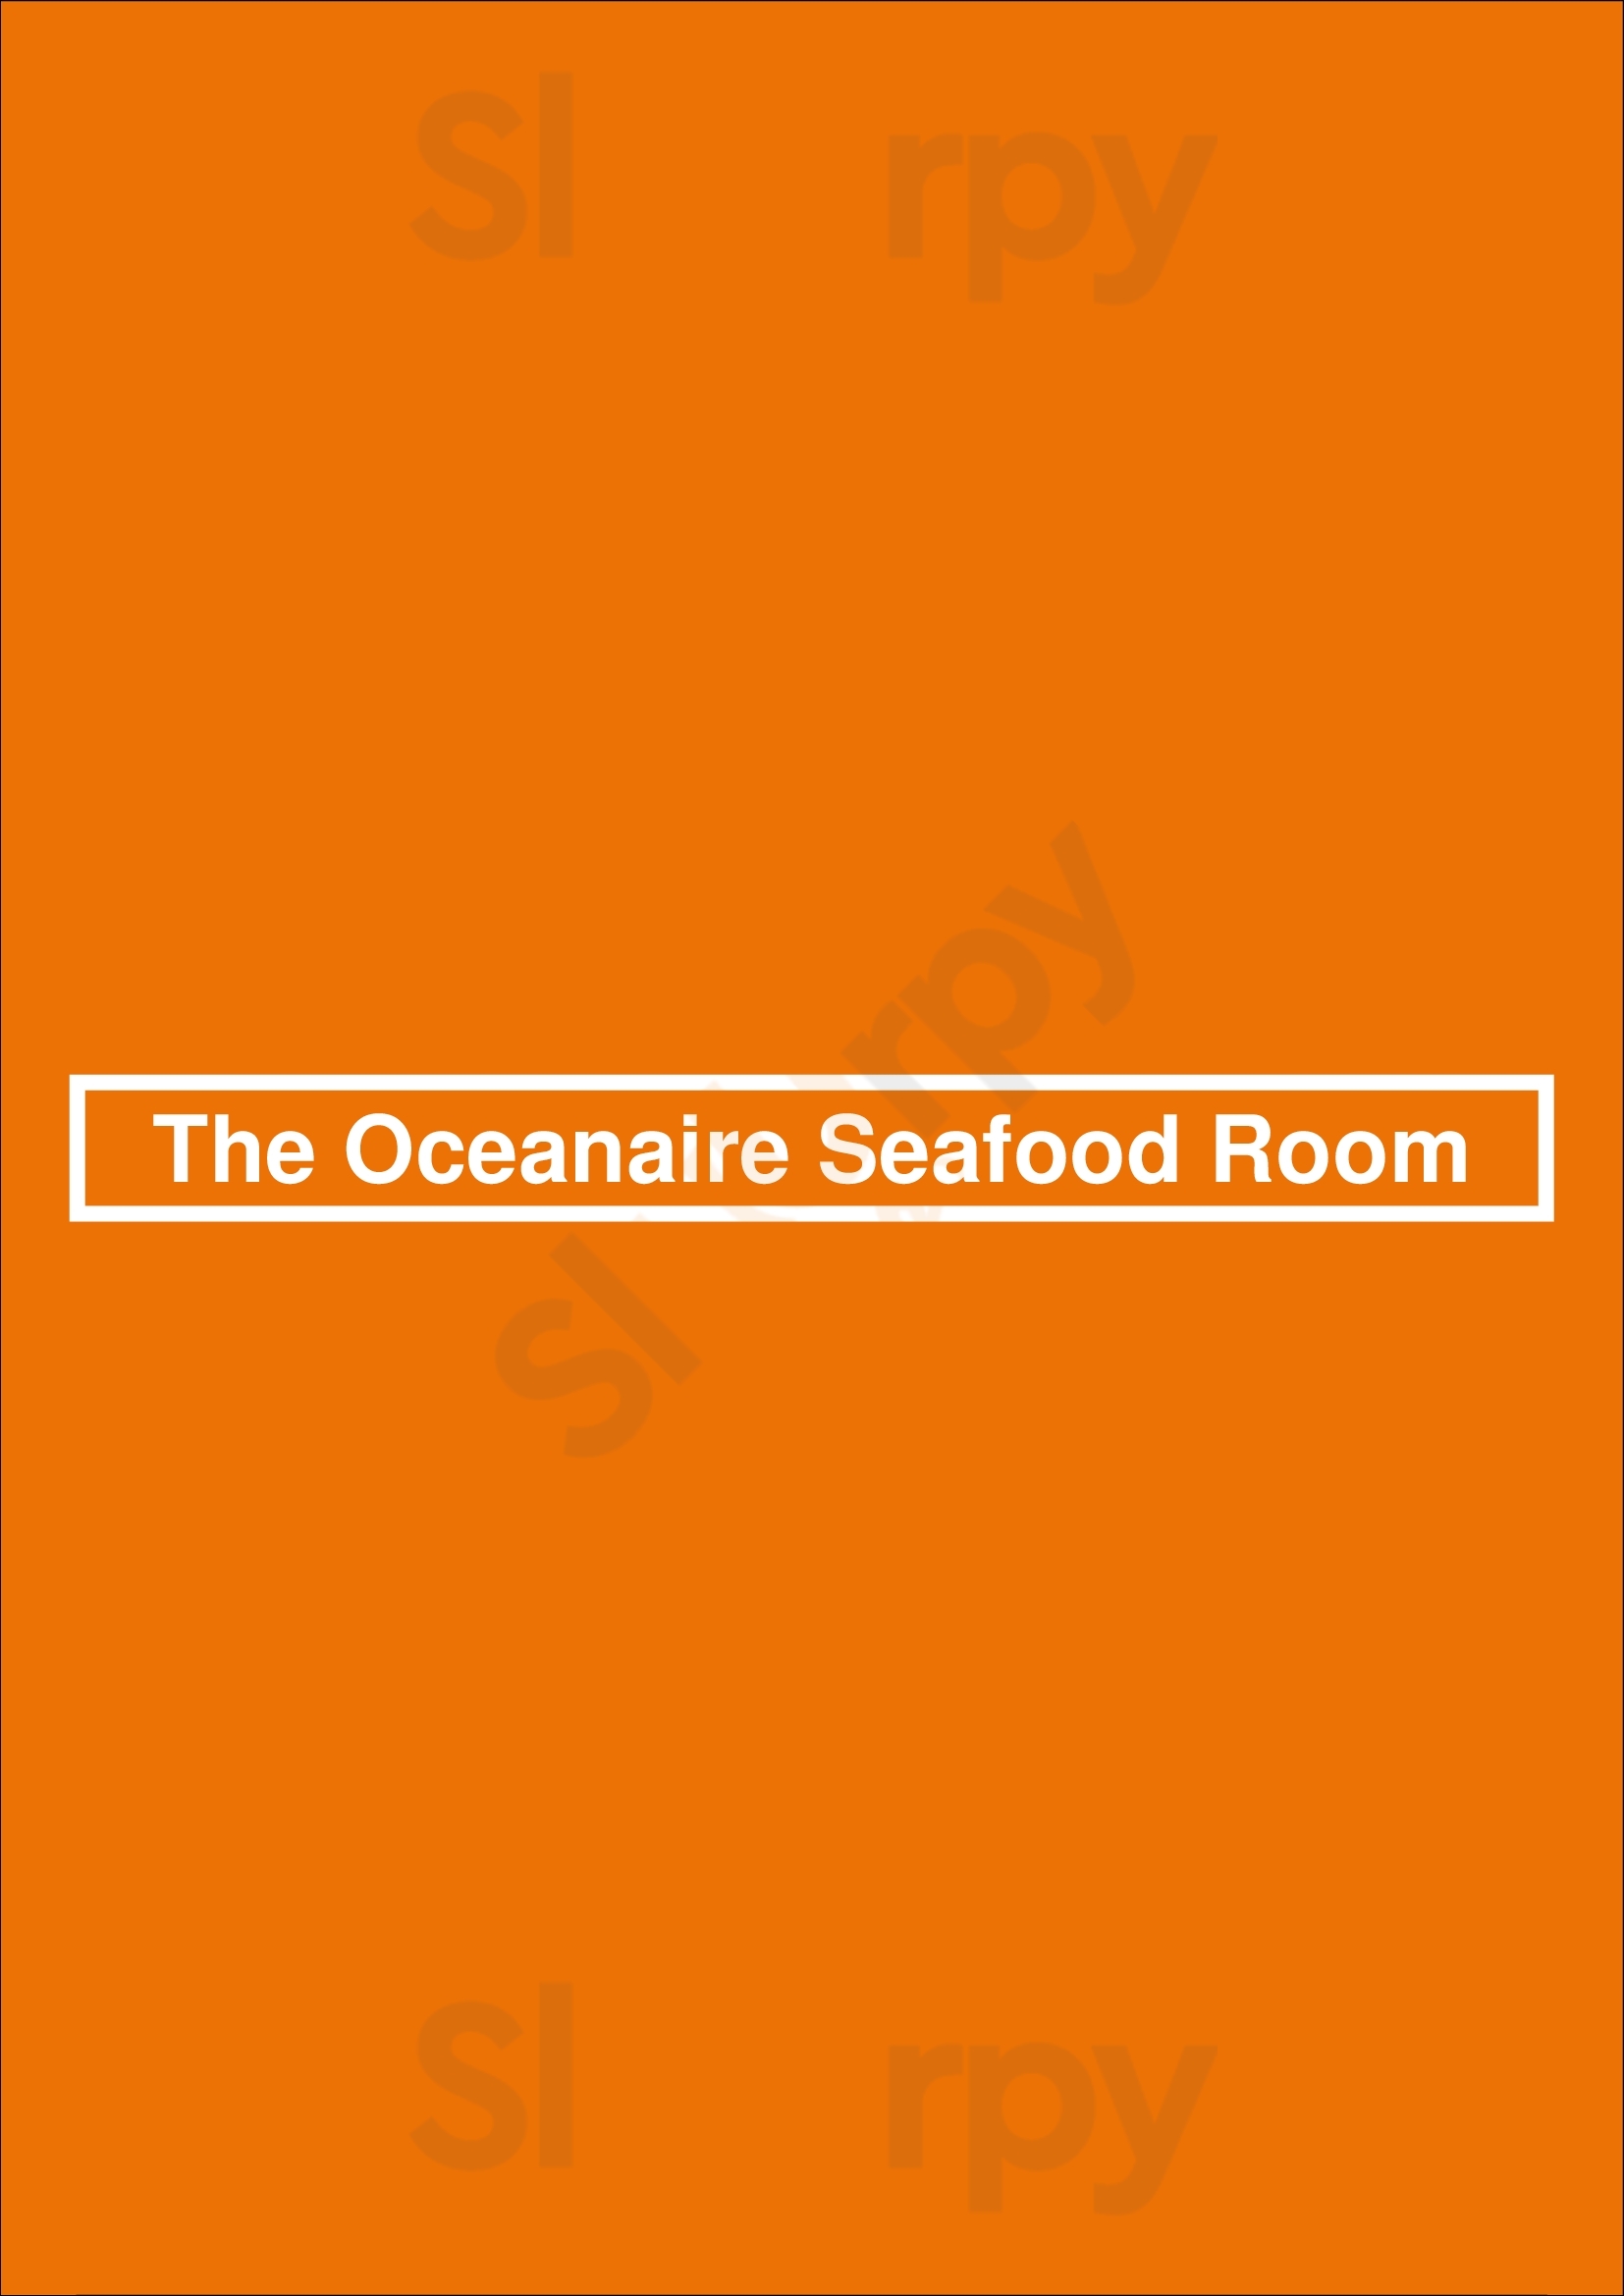 The Oceanaire Seafood Room San Diego Menu - 1